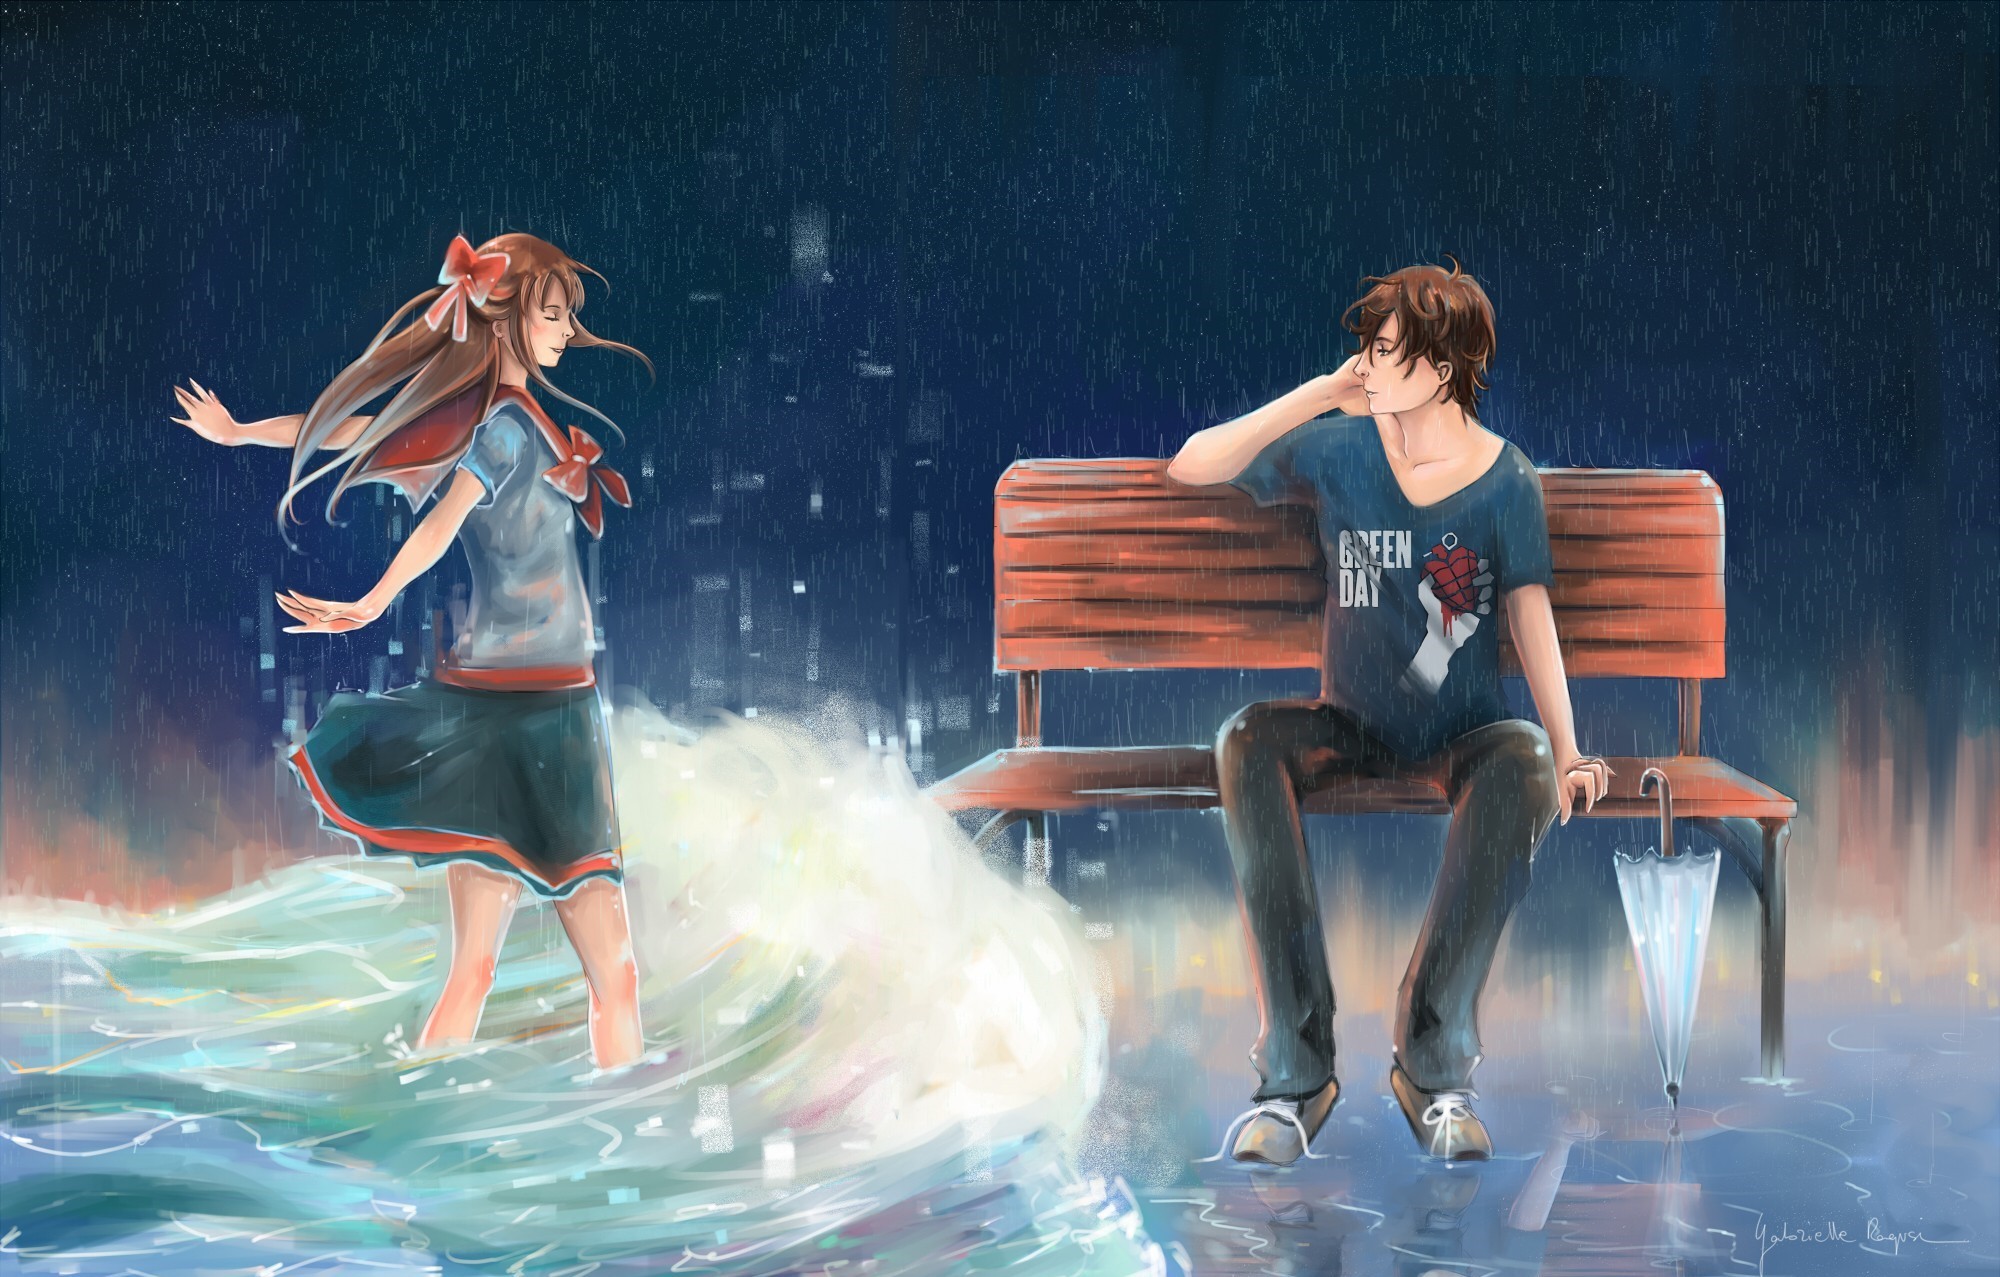 General 2000x1277 artwork anime girls anime boys water bench standing sitting umbrella brunette long hair closed eyes in water women men rain